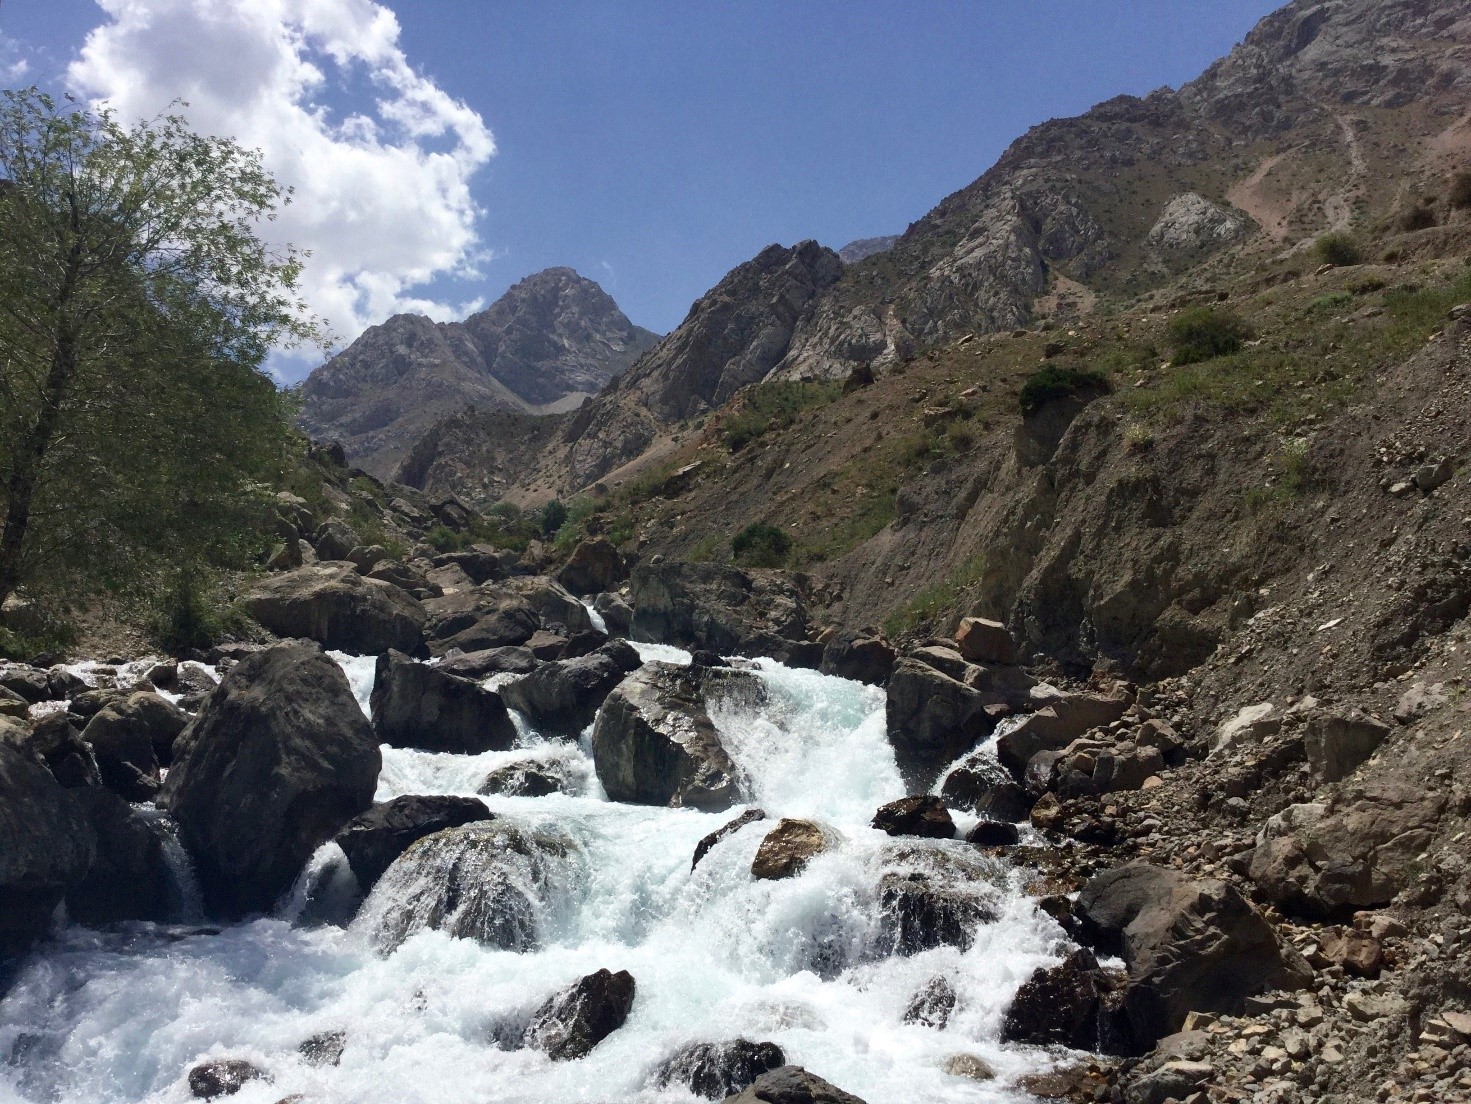 Tajikistanporn - Water in Tajikistan, abundant yet challenging - Acted